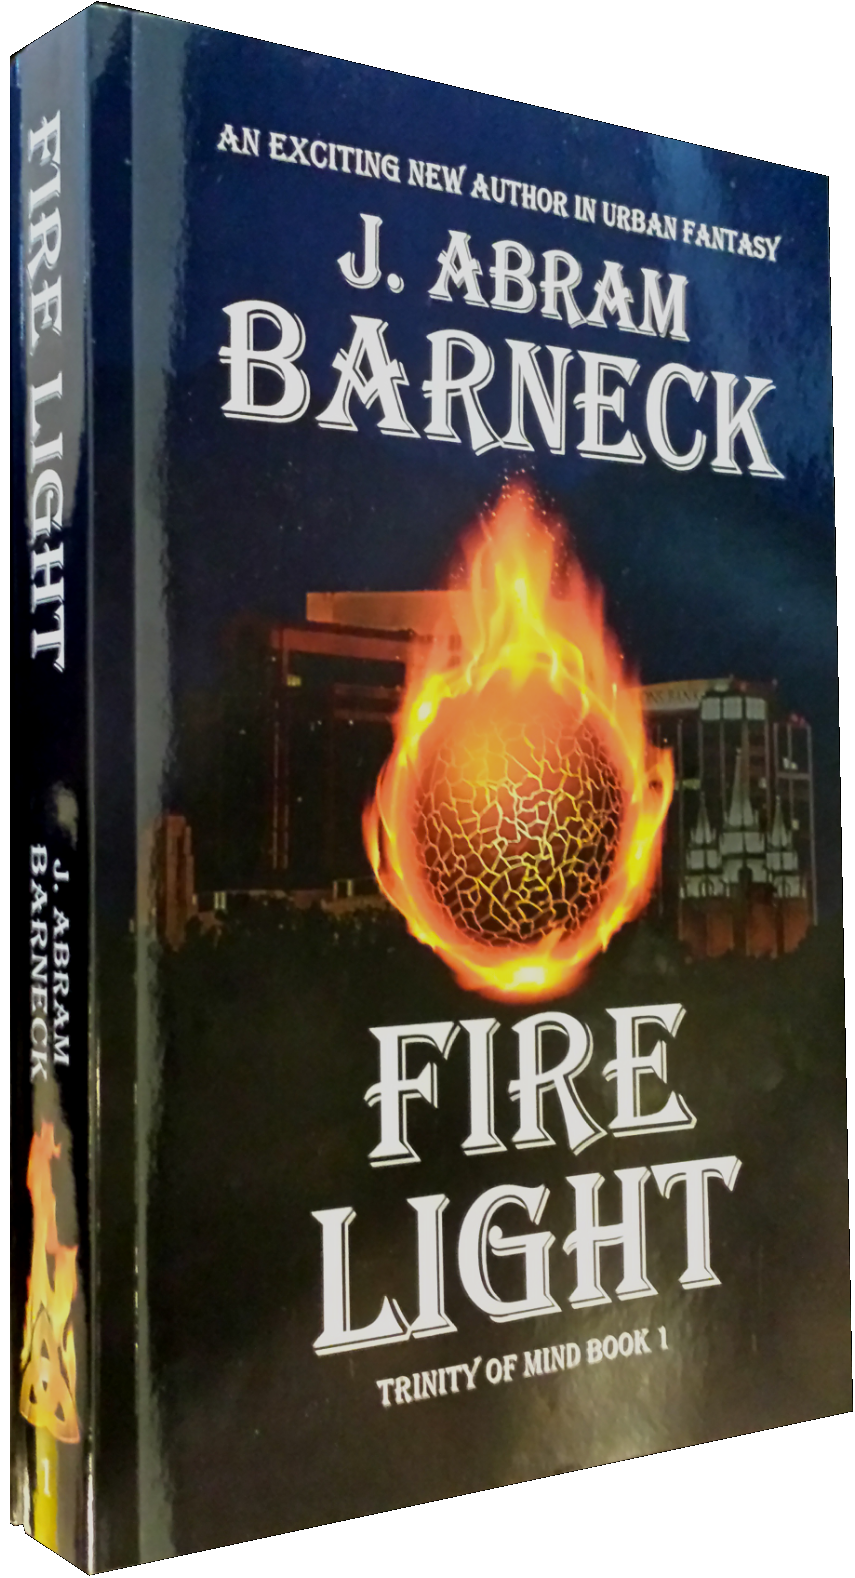 Fire Light by J. Abram Barneck